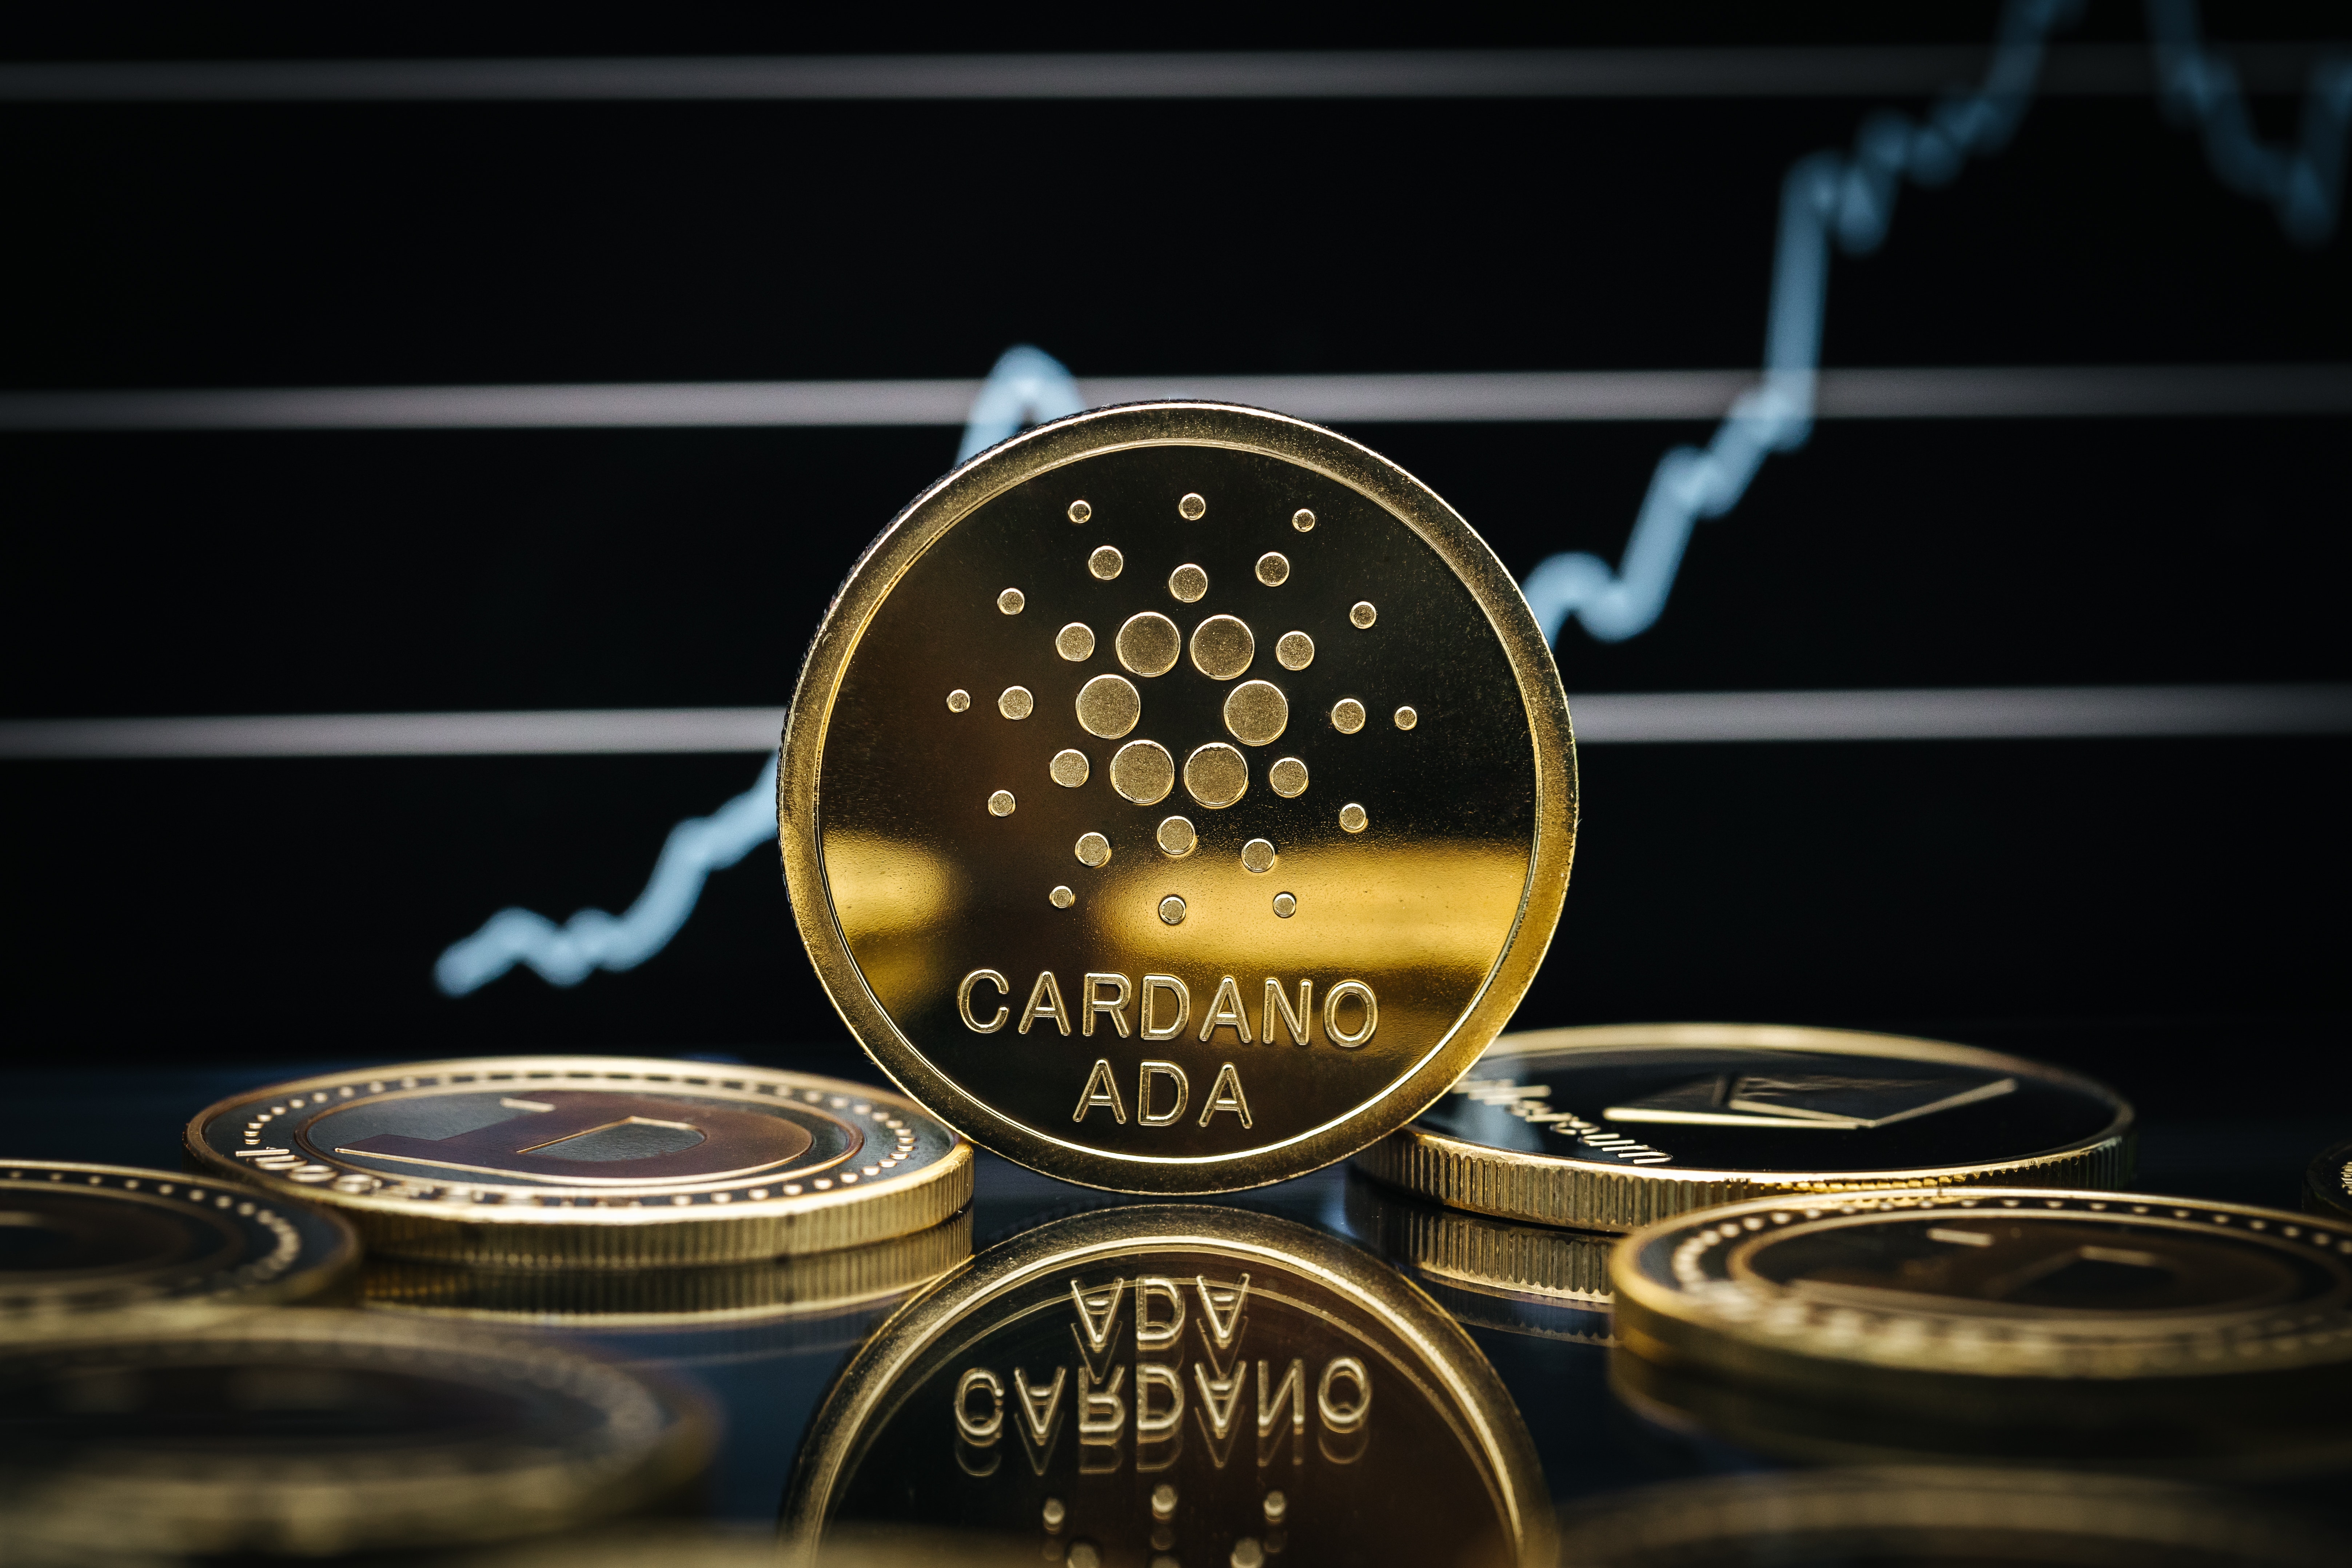 Cardano (ADA) Seen Weakening After Outperforming Bitcoin, Ethereum, Dogecoin In Past Week